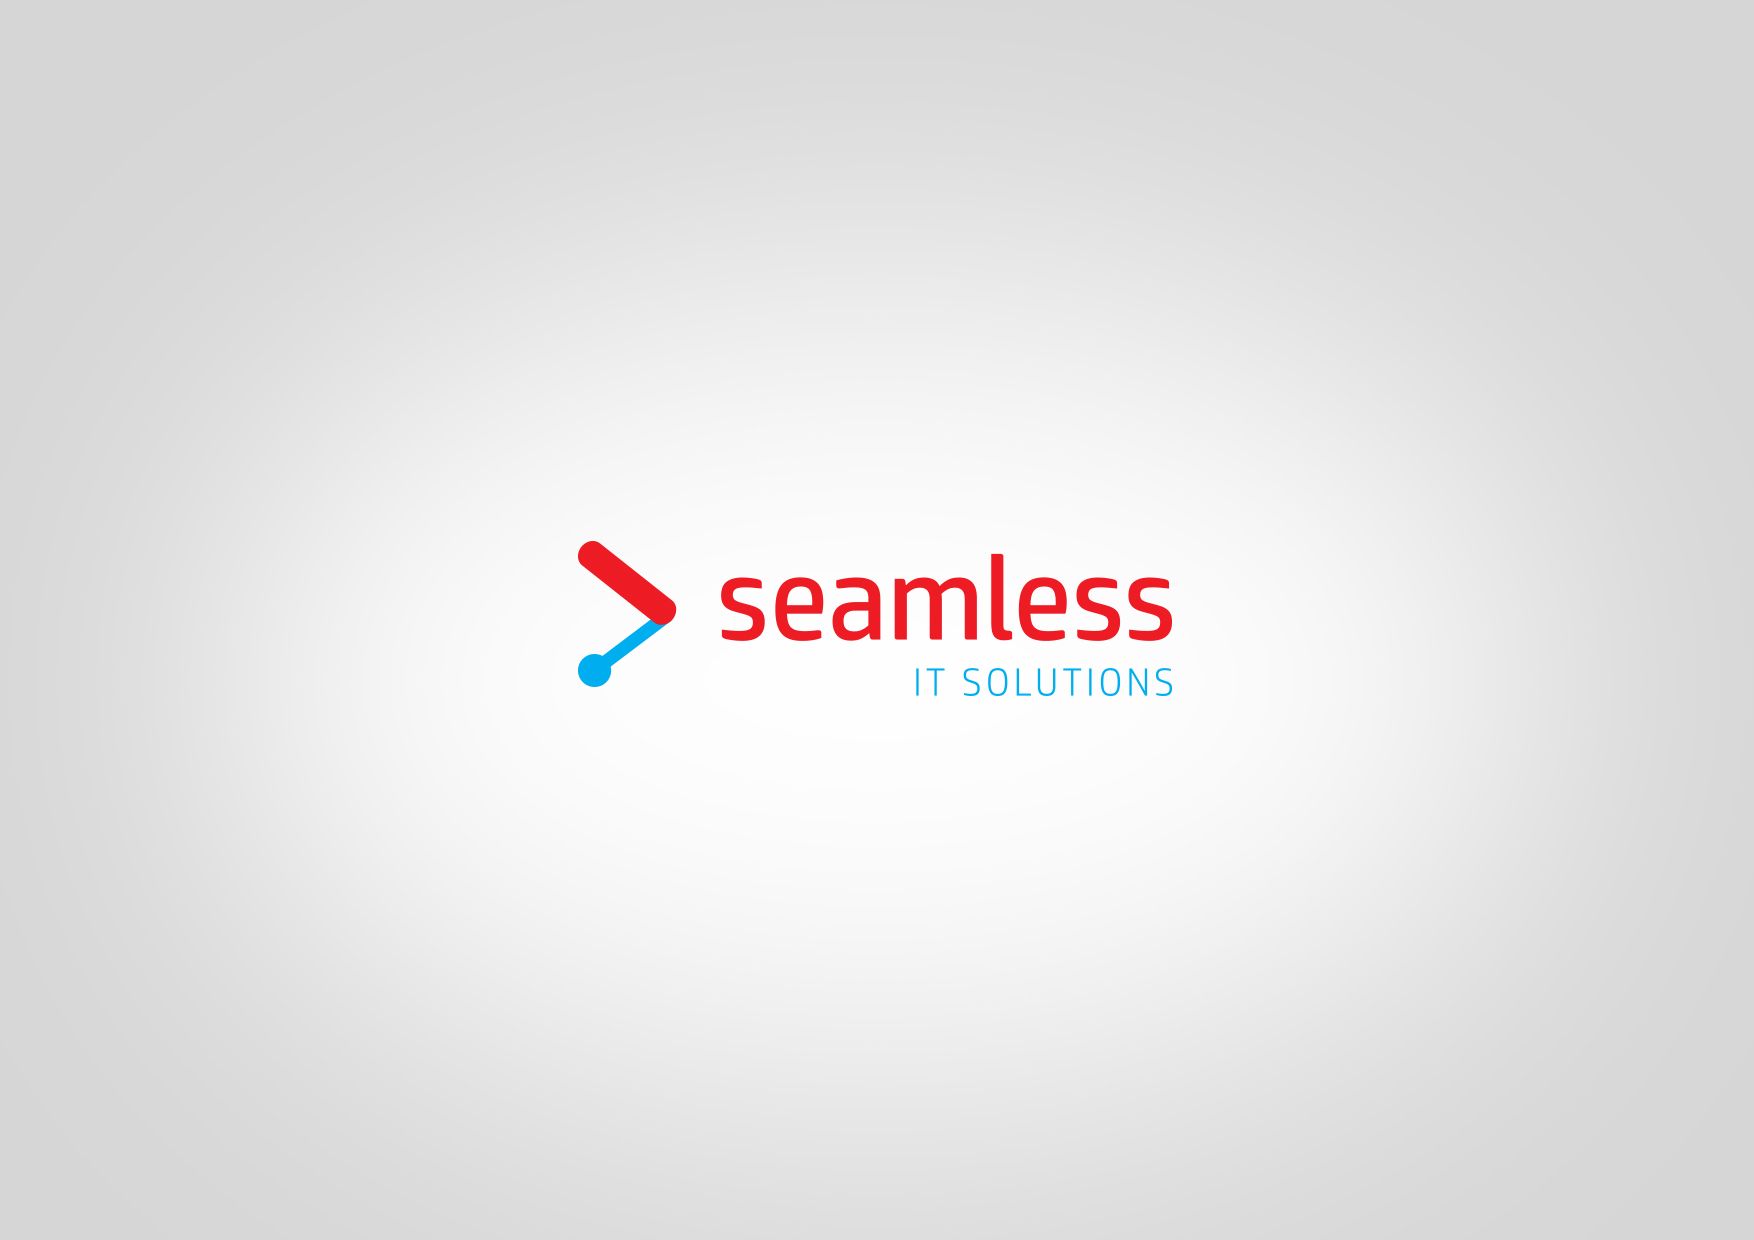 Seamless1 - SEAMLESS